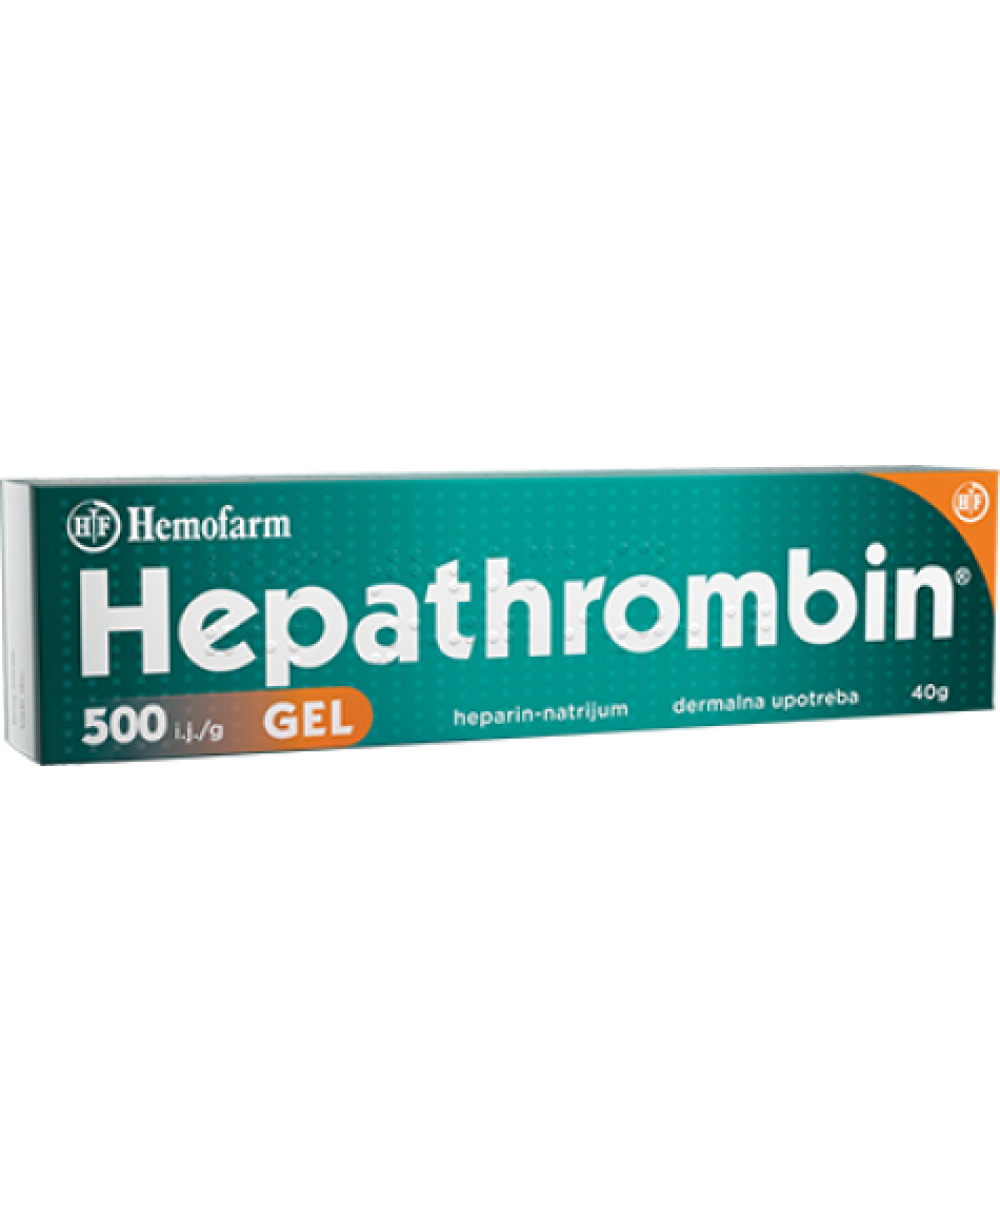 Afectiuni circulatorii - HEPATHROMBIN 500UI/G GEL 40G HEMOFARM, nordpharm.ro